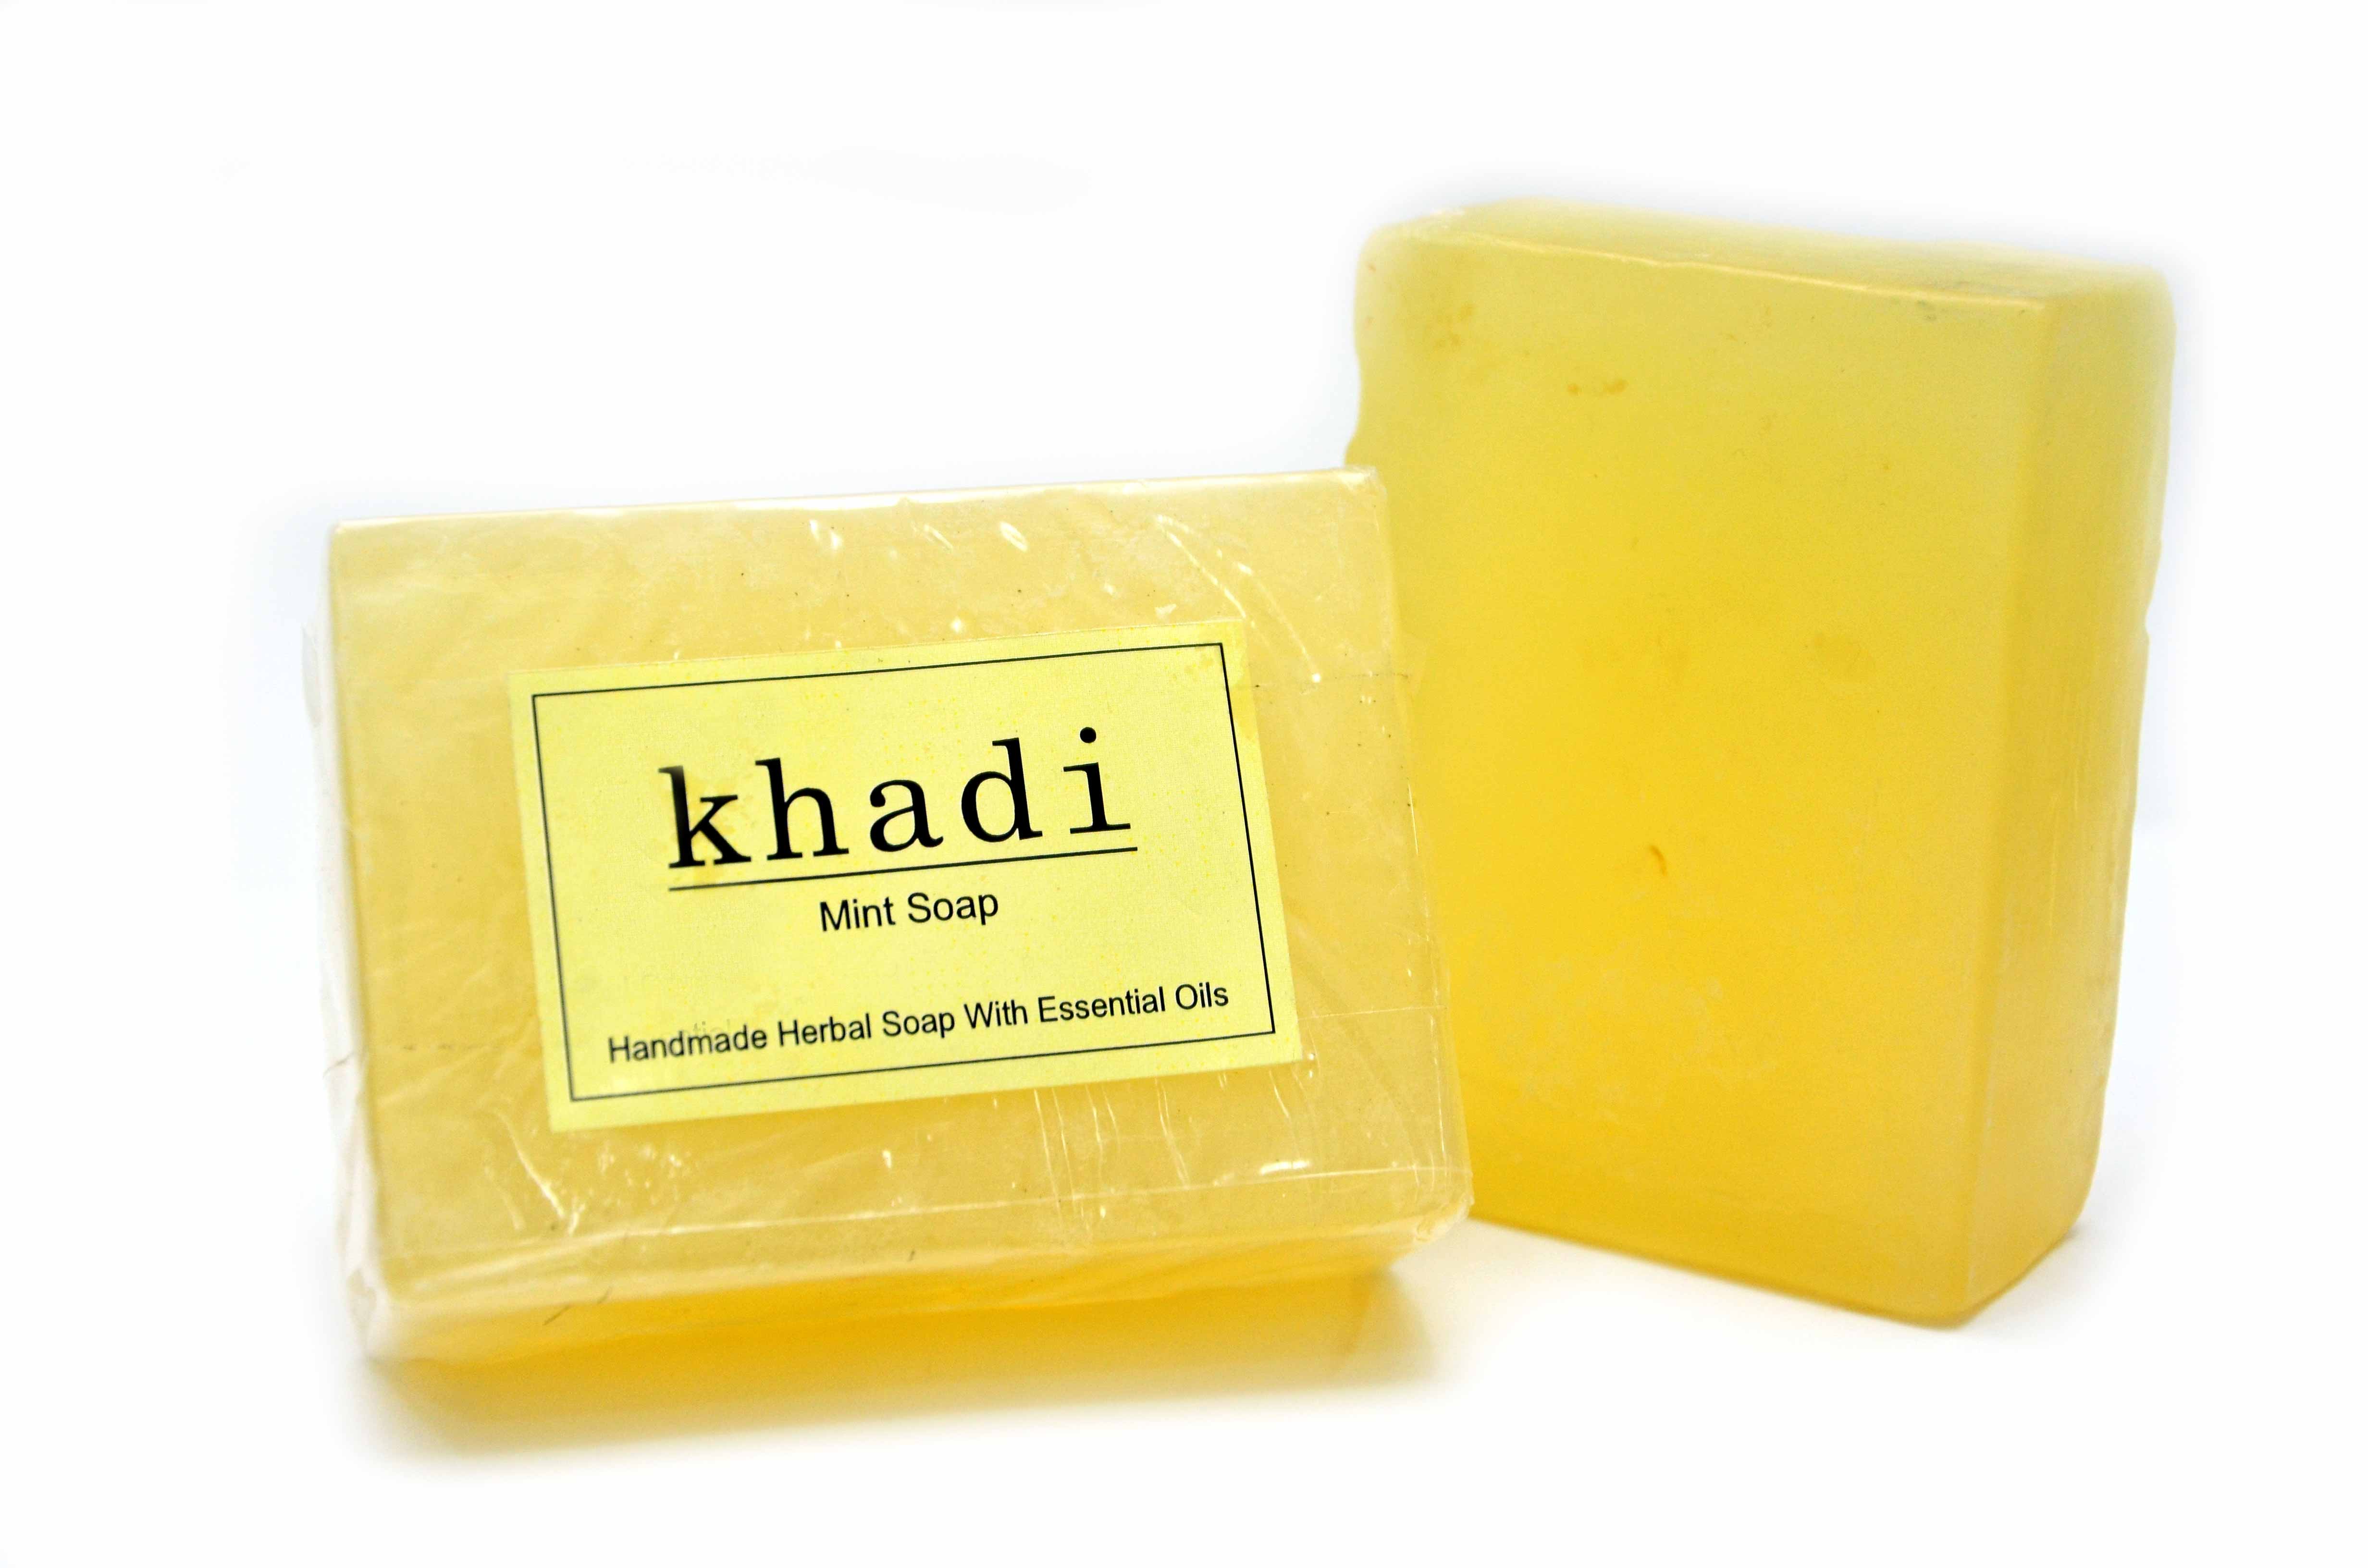 Vagad's Khadi Mint Soap